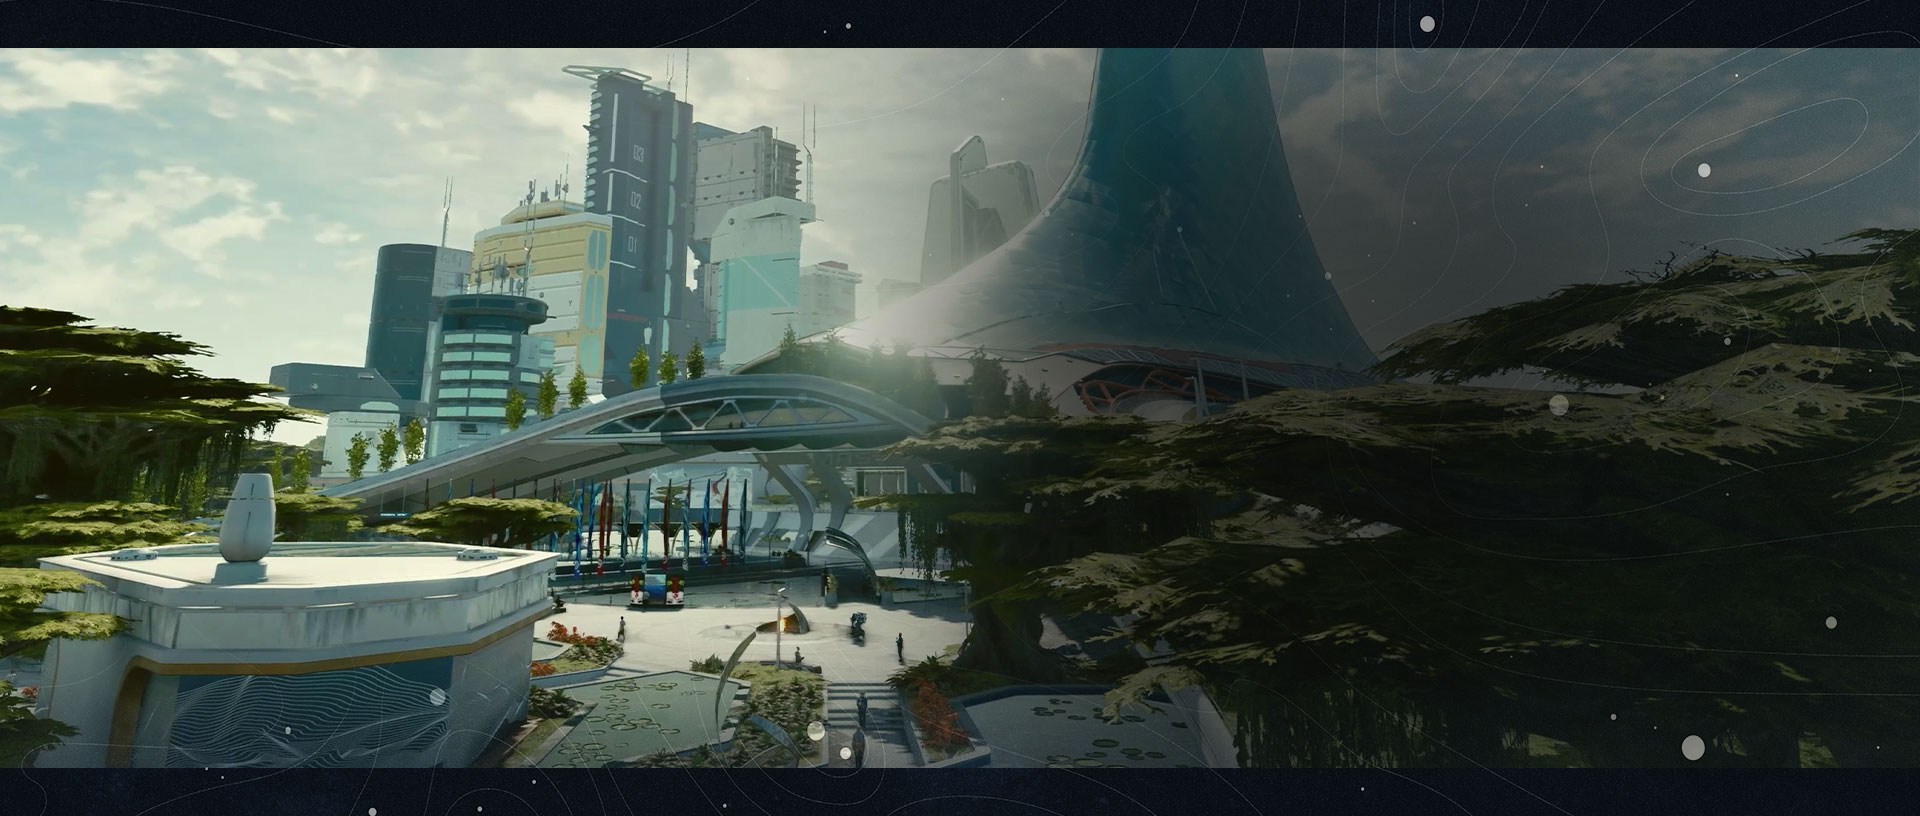 Verdant green treetops surround the city of New Atlantis